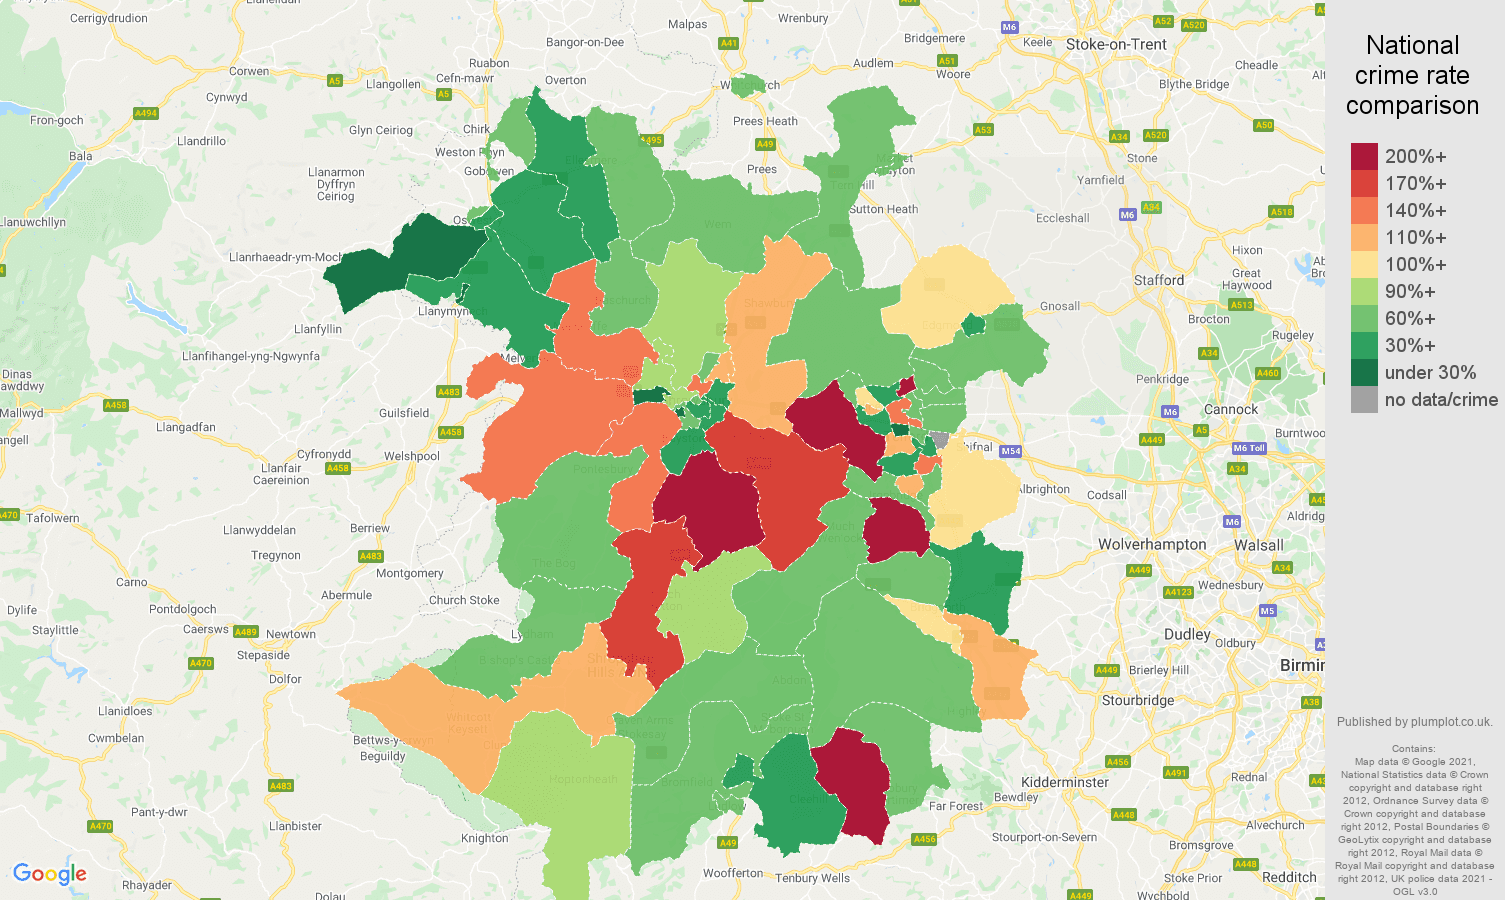 Shropshire burglary crime rate comparison map